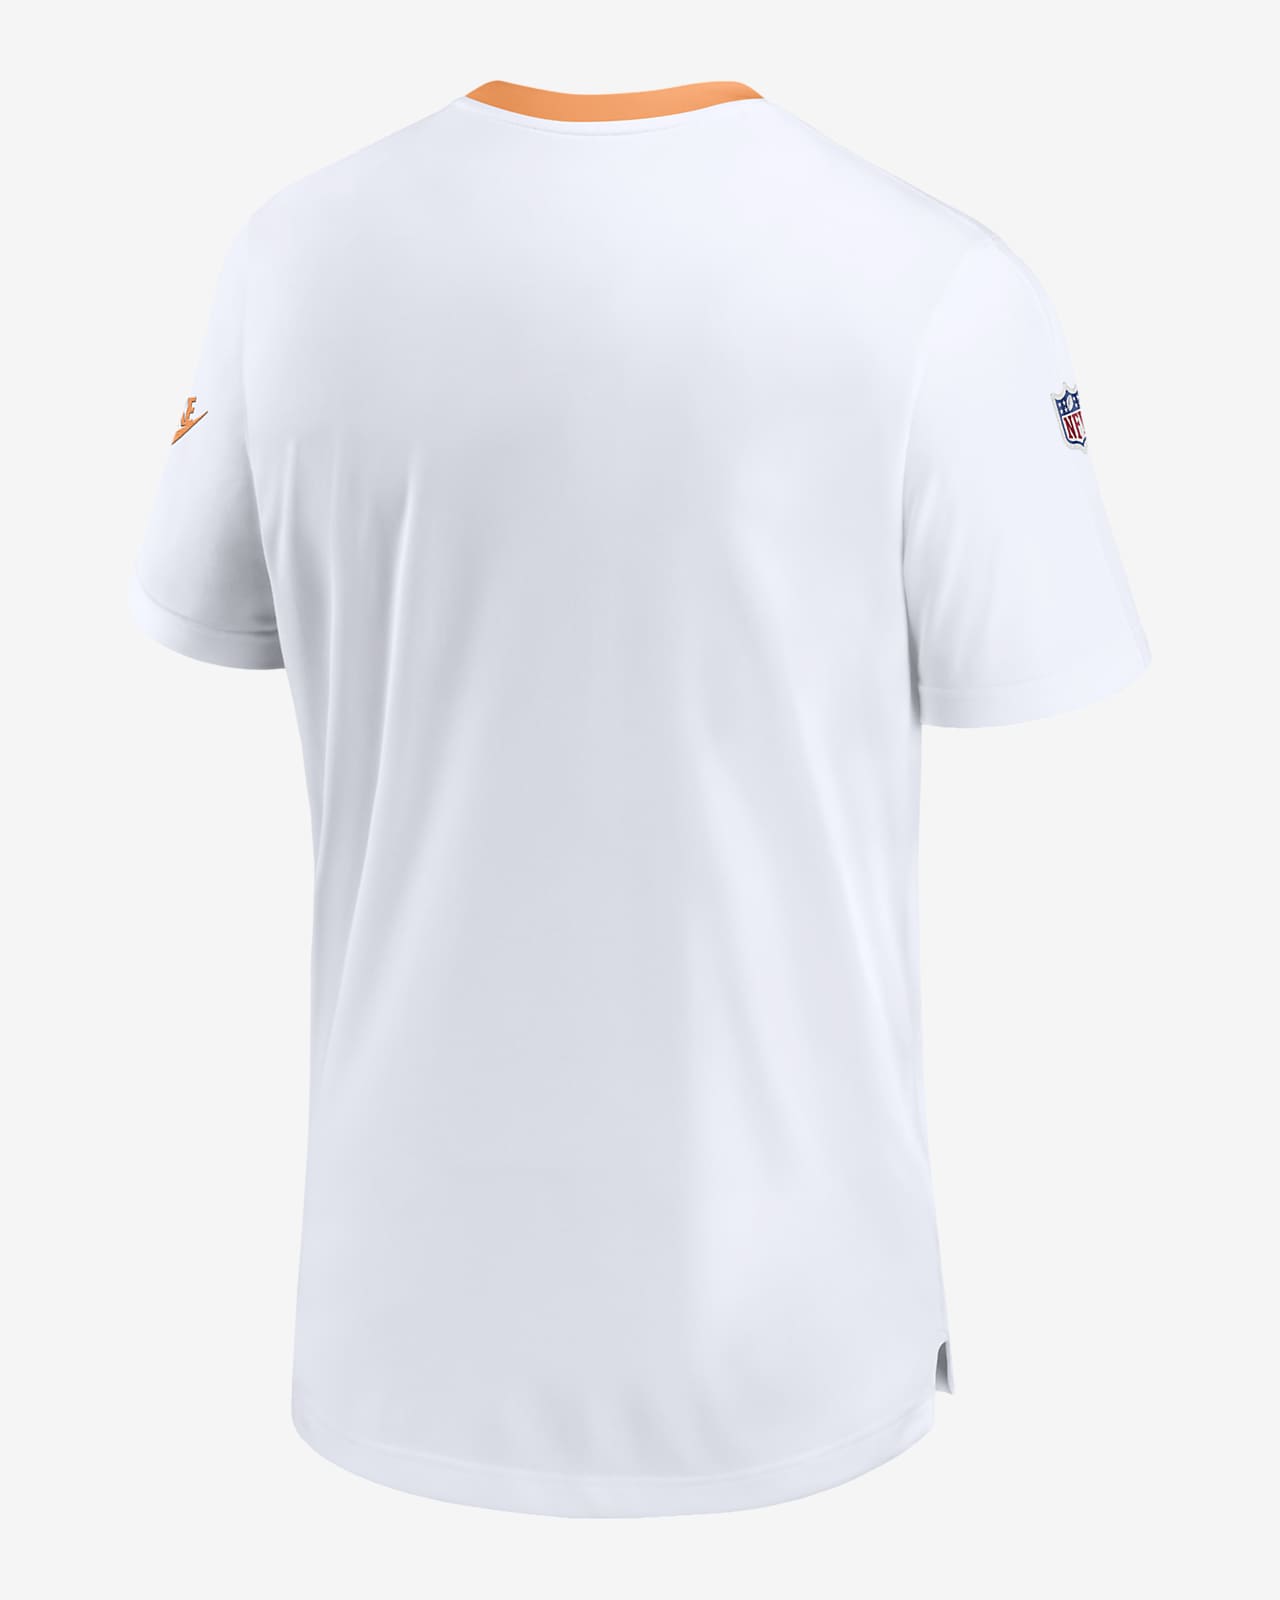 Lids Tampa Bay Buccaneers Nike Sideline Coach Chevron Lock Up Logo V-Neck  Performance T-Shirt